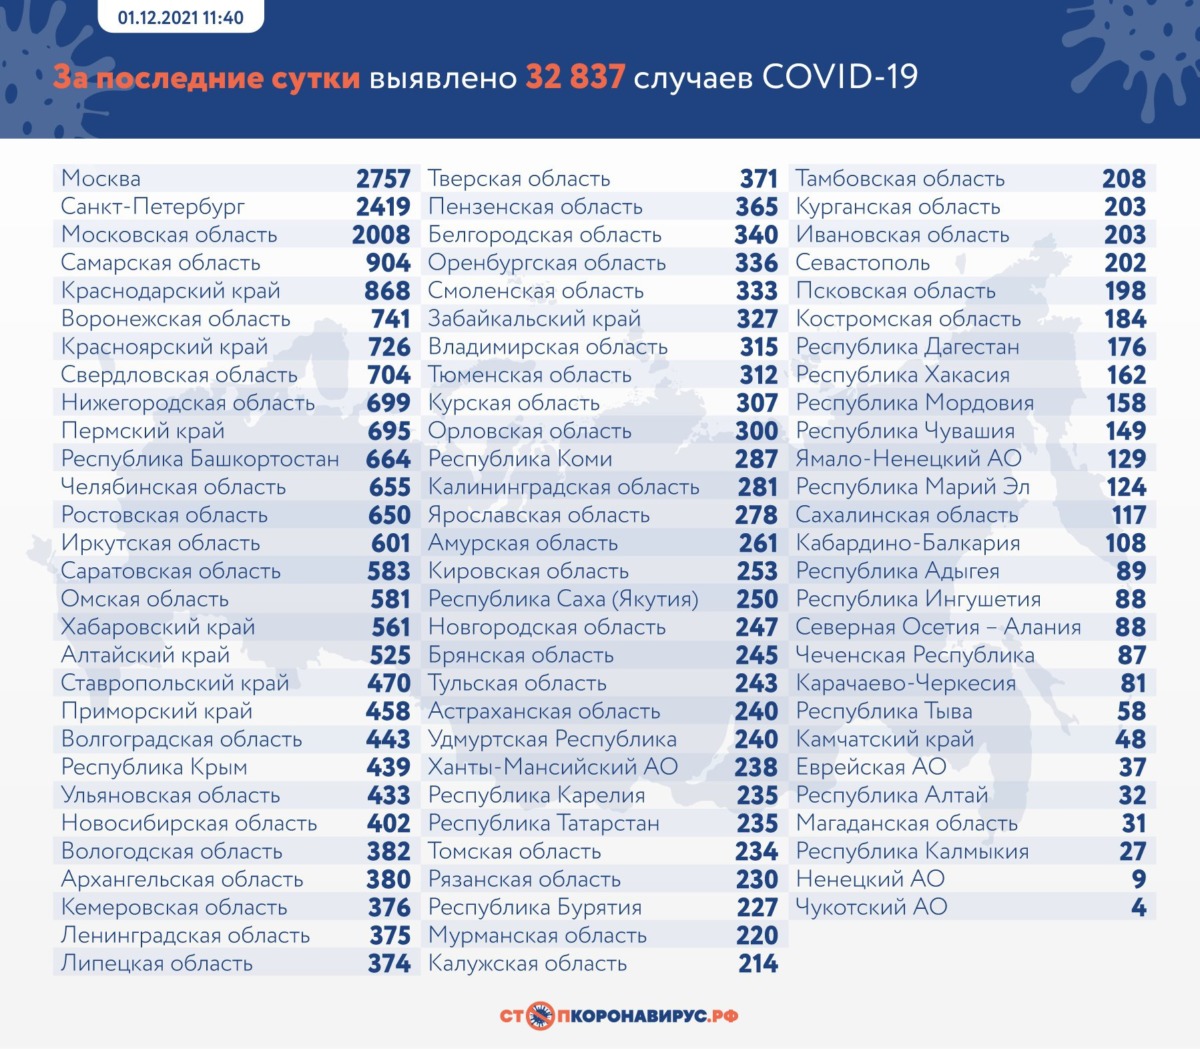 Оперативная статистика по коронавирусу в России на 1 декабря